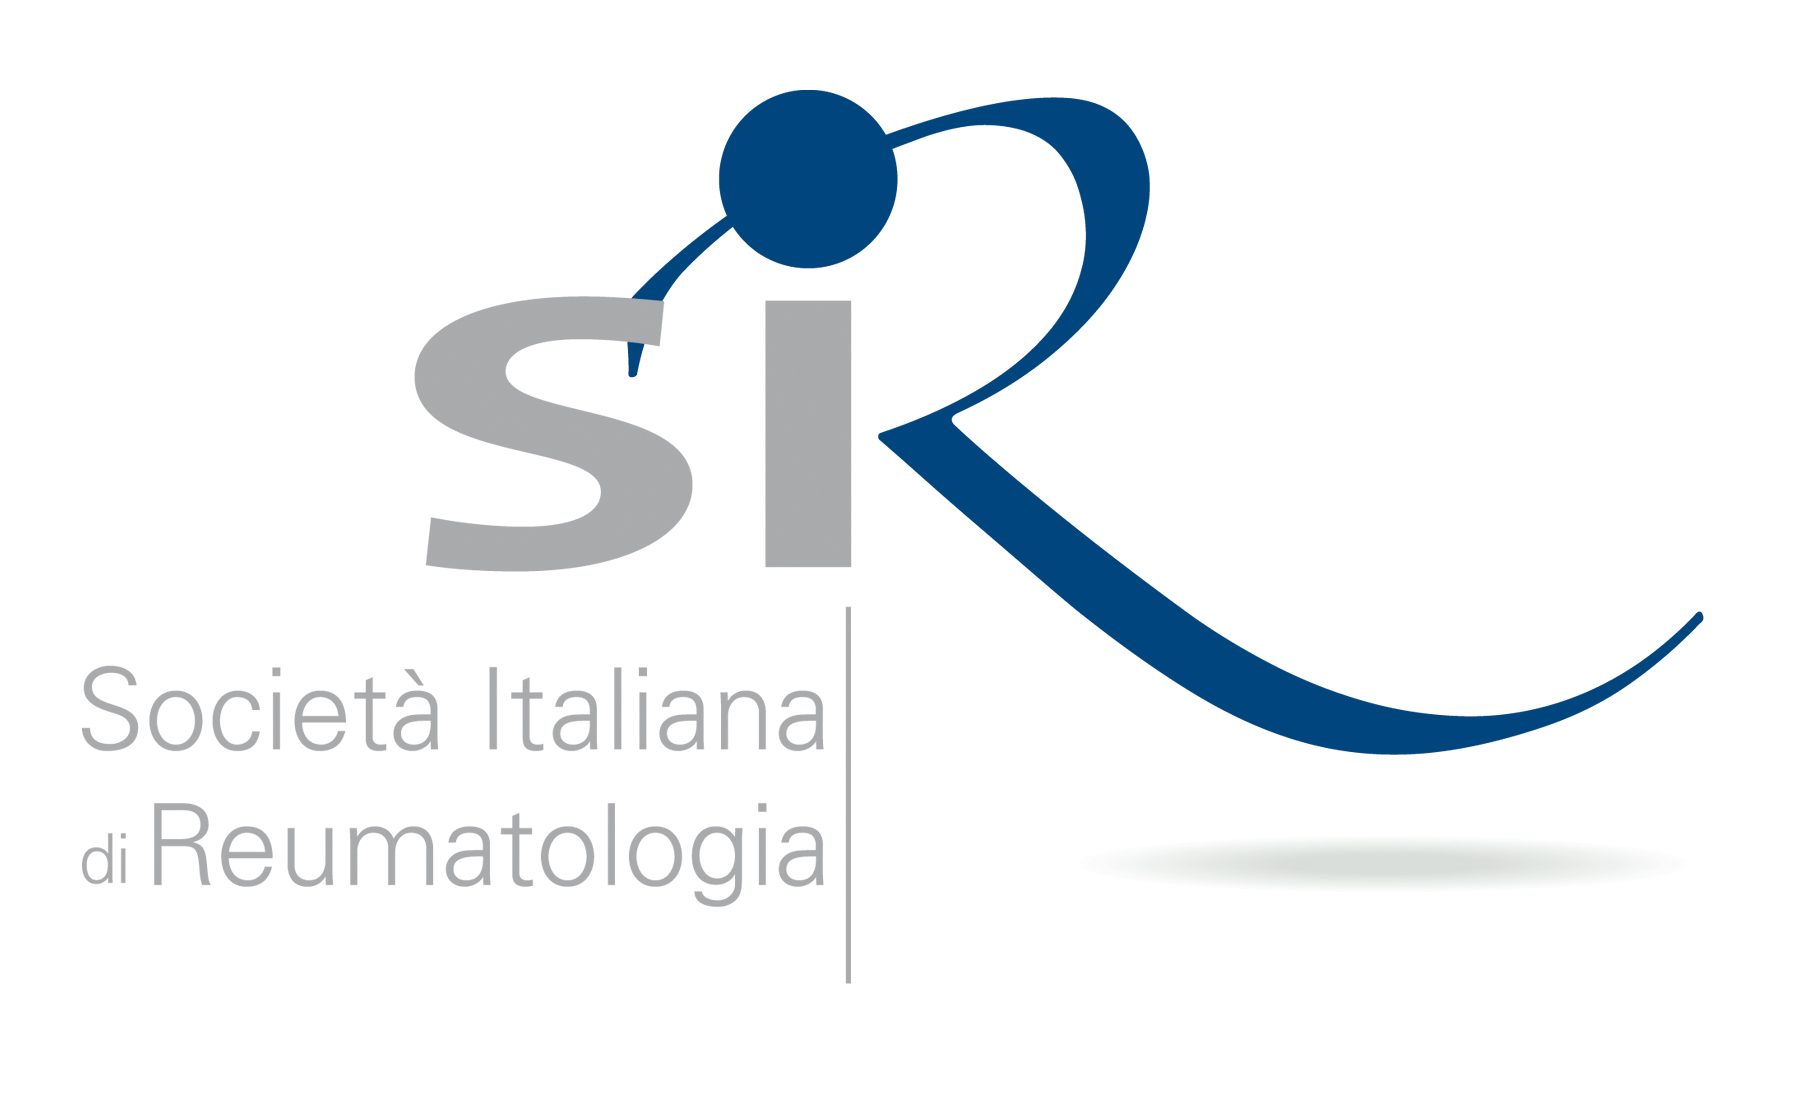 Società Italiana di Reumatologia